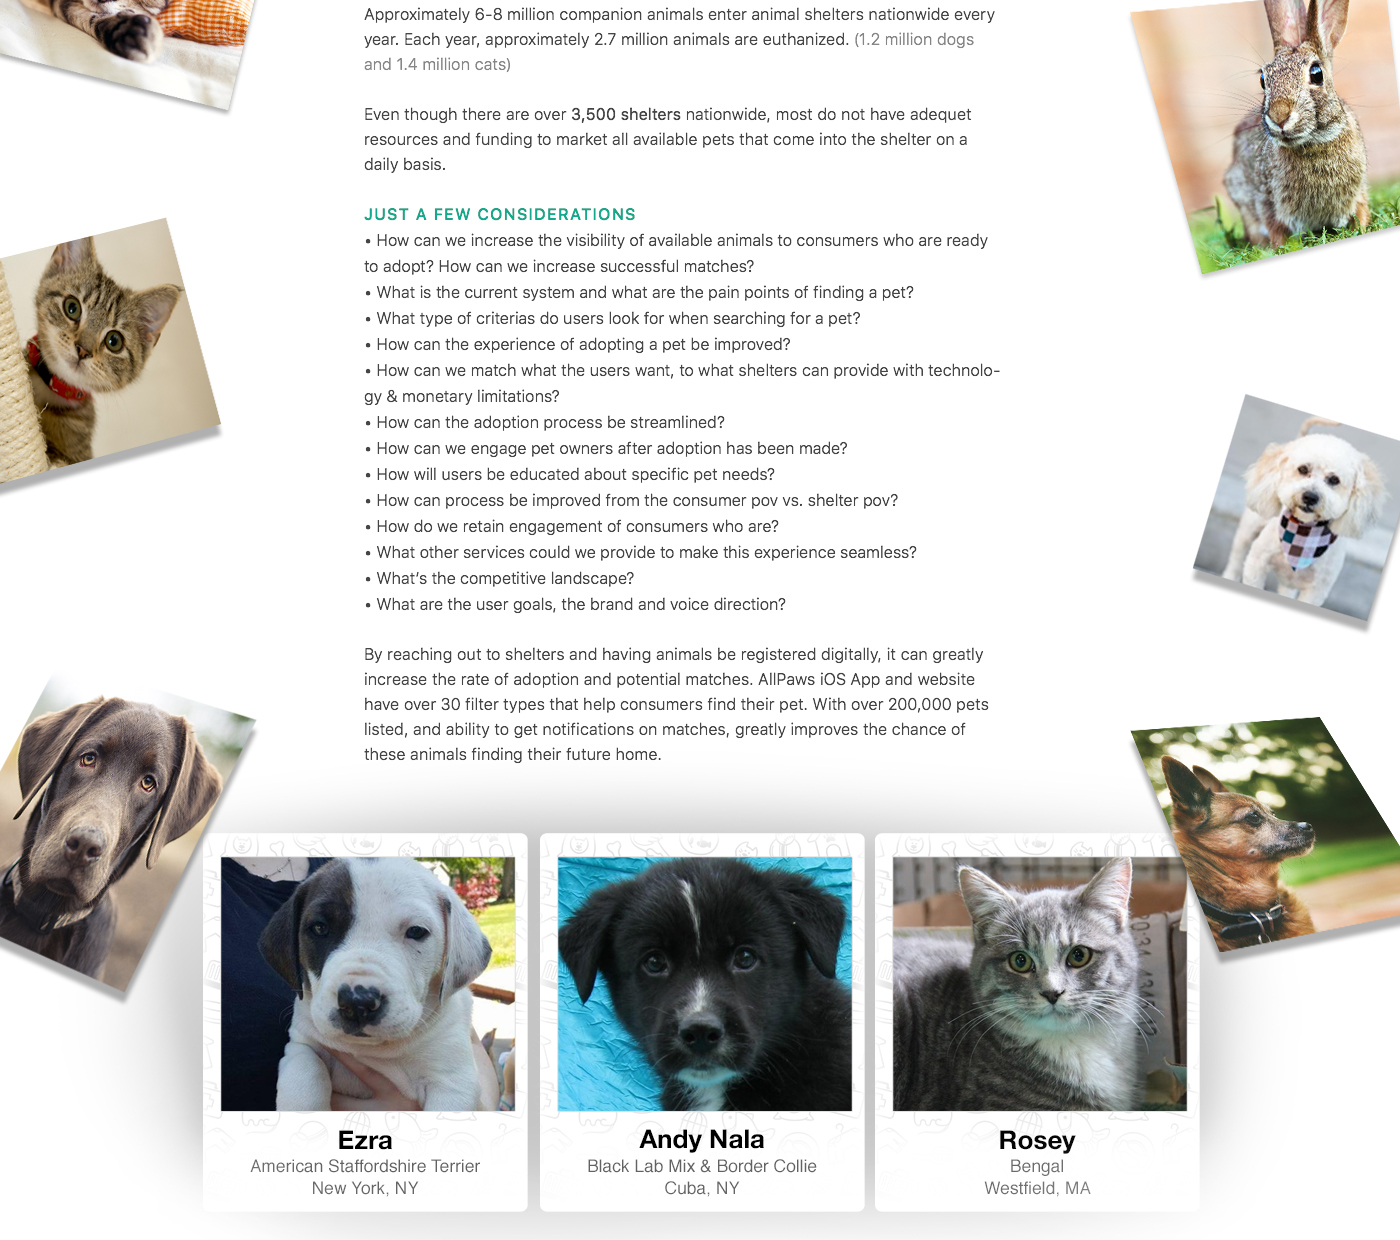 Adobe Portfolio Pet adoption shelter animals dogs Cat app mobile app design user interface user experience